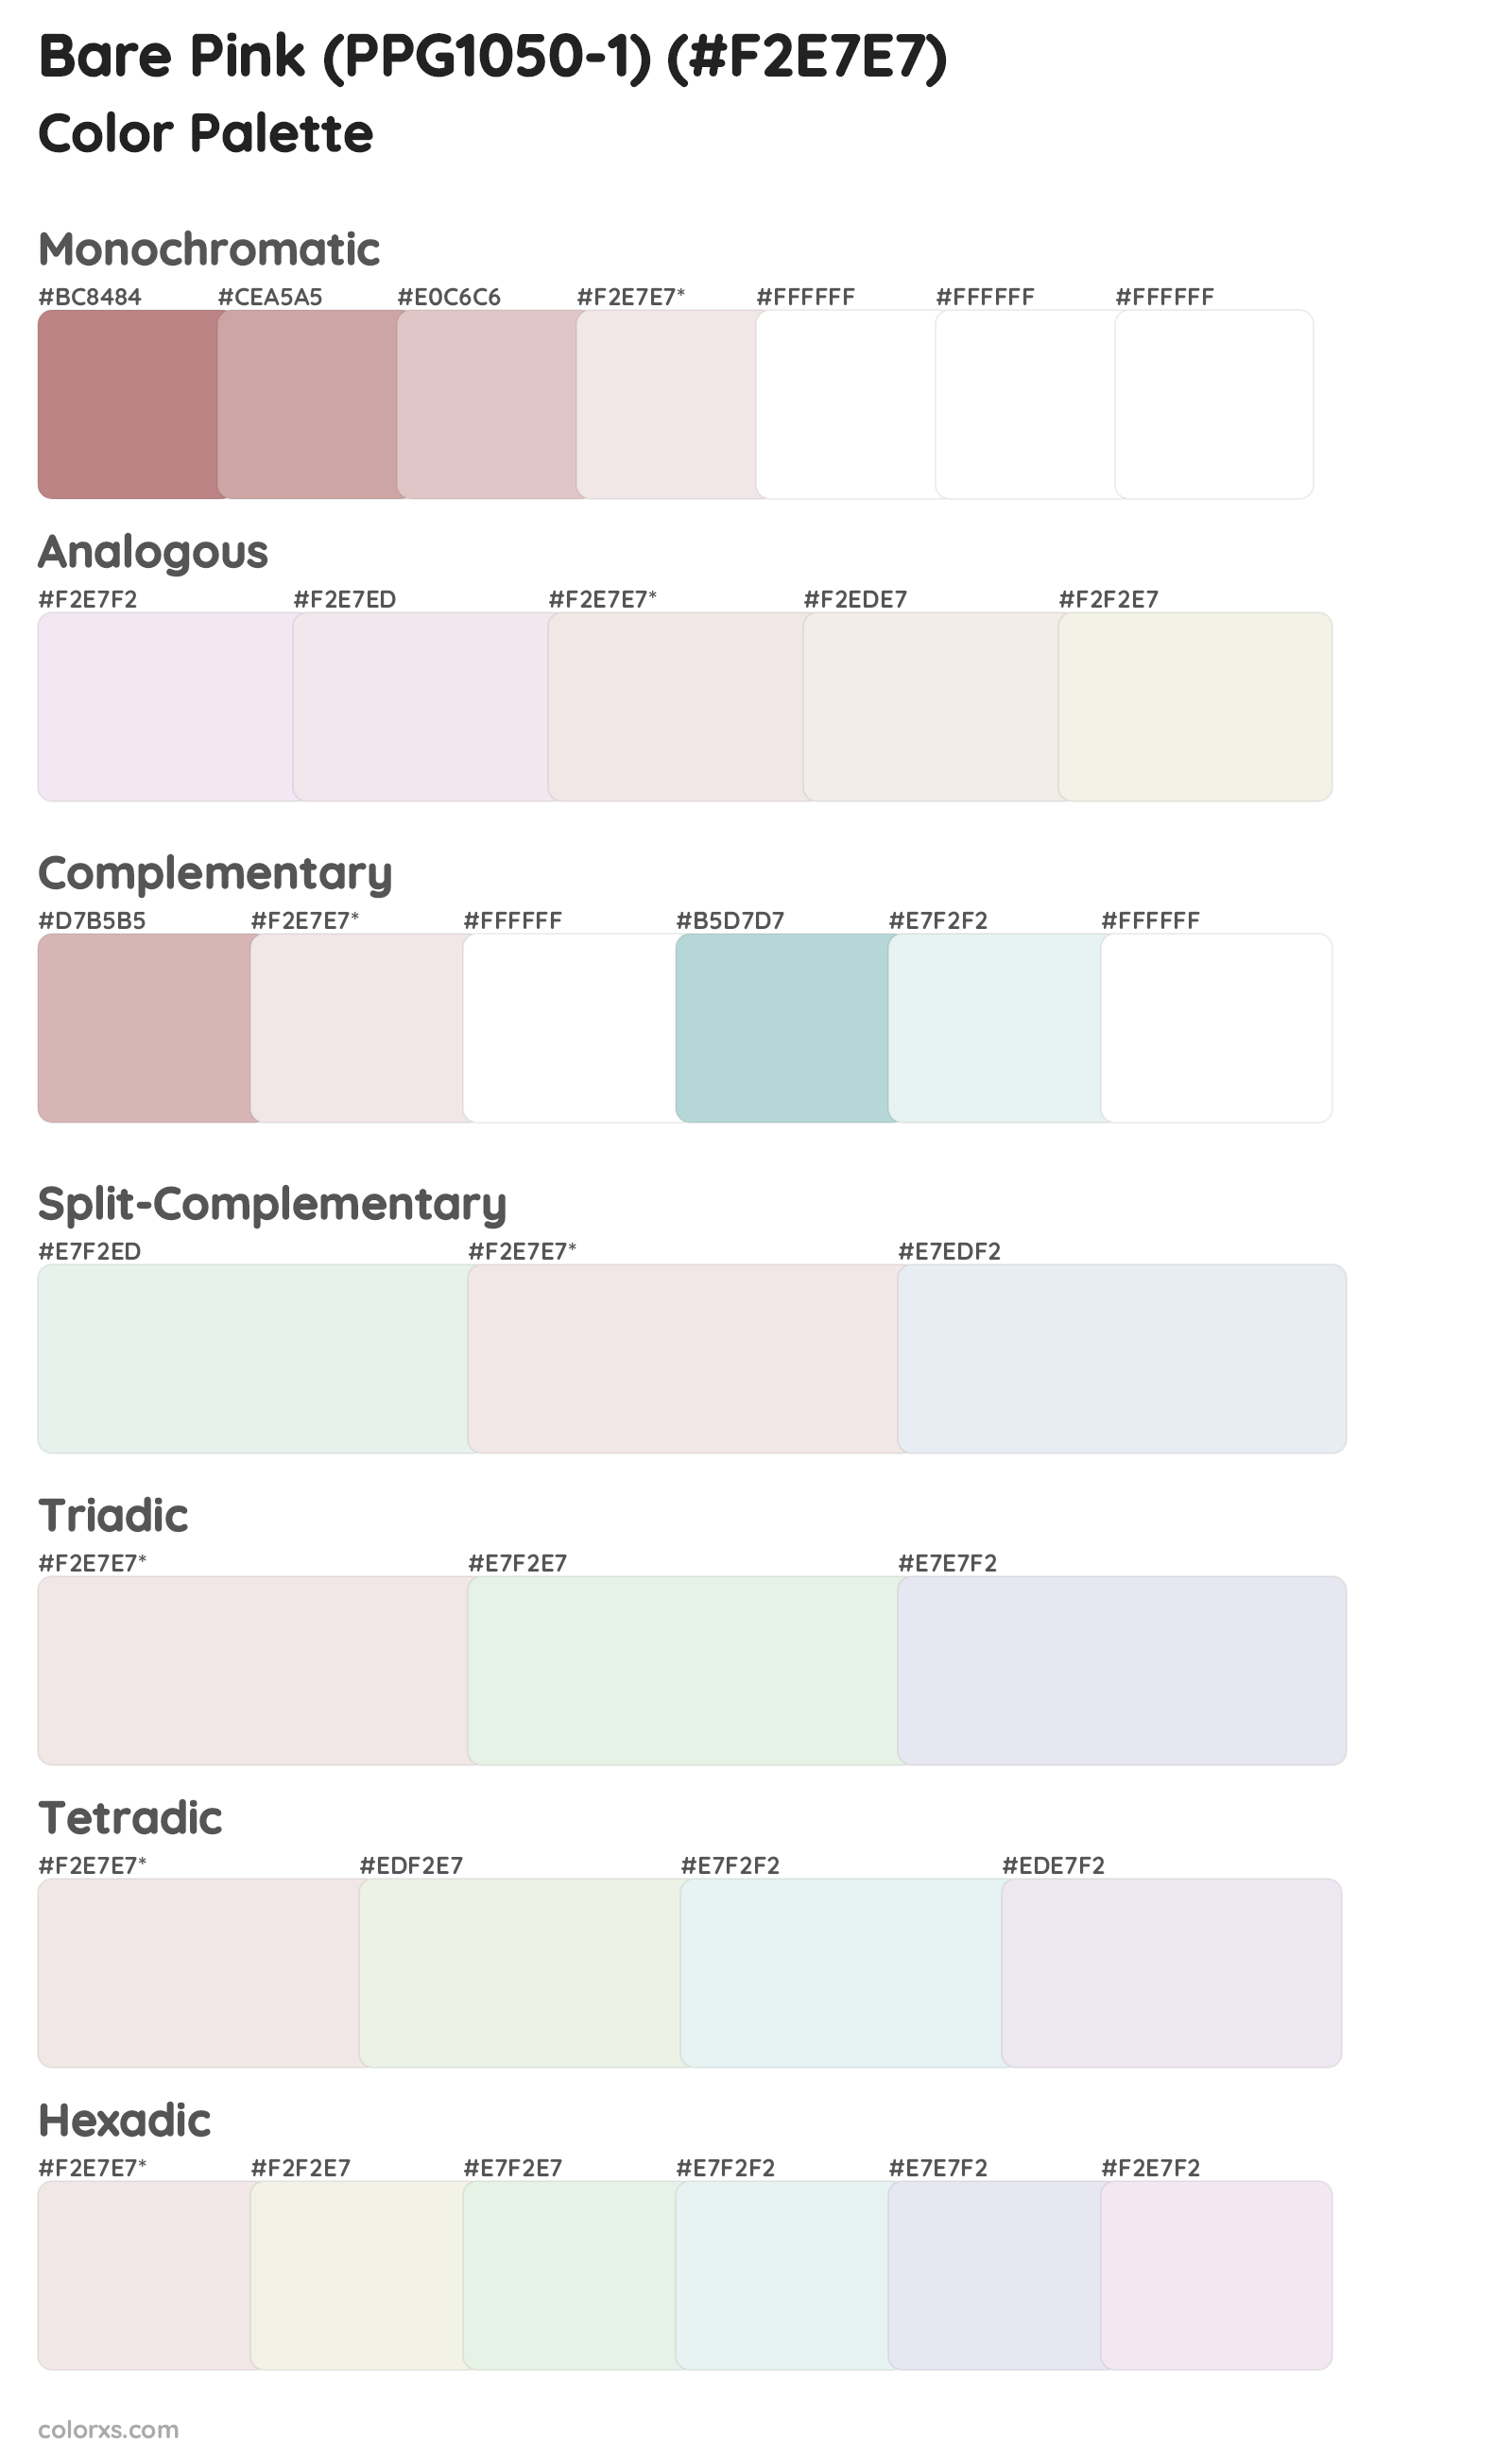 Bare Pink (PPG1050-1) Color Scheme Palettes